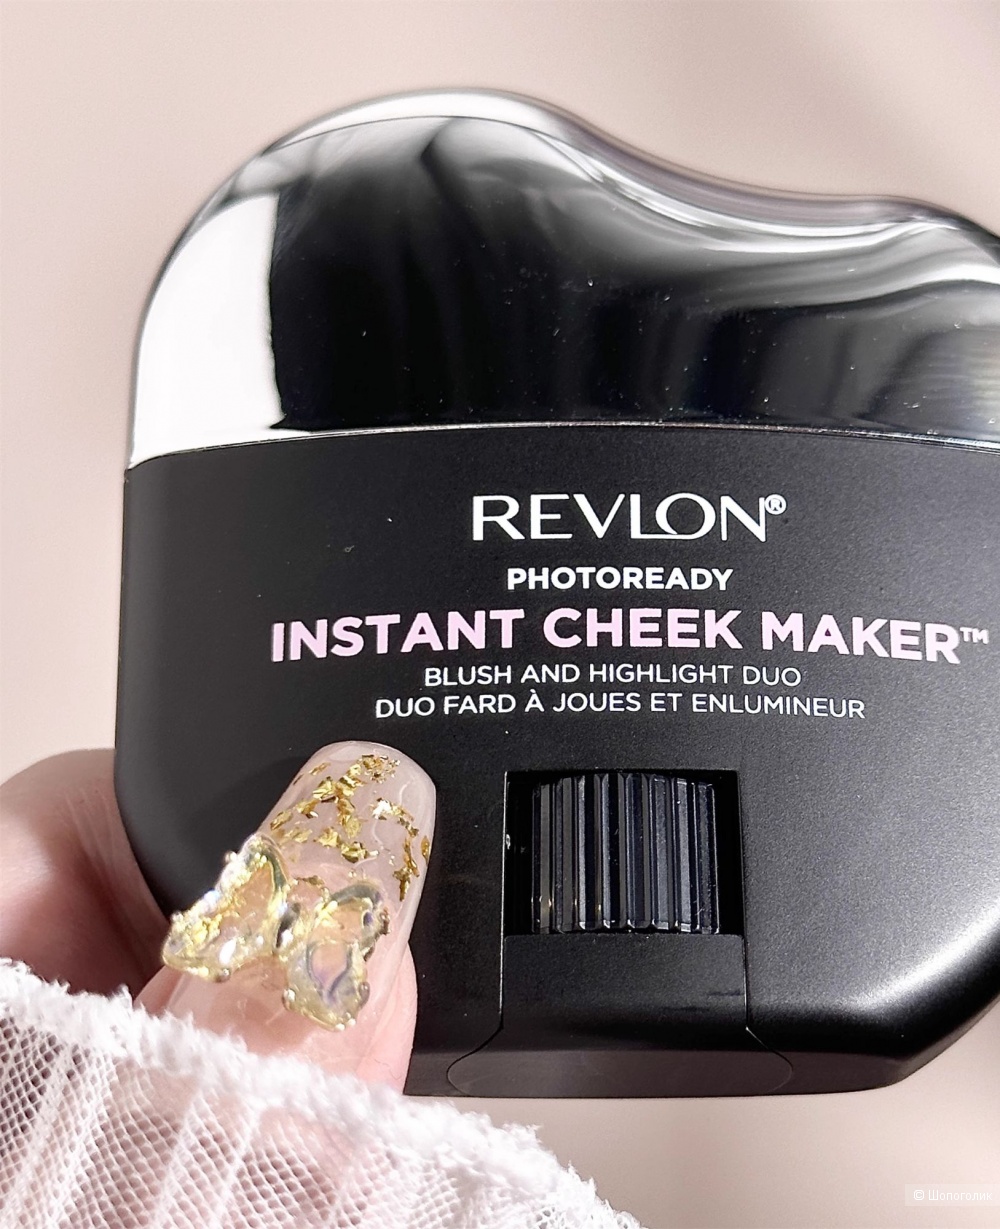 Revlon PhotoReady Instant Cheek Maker Дуэт румян и хайлайтера 12,4г